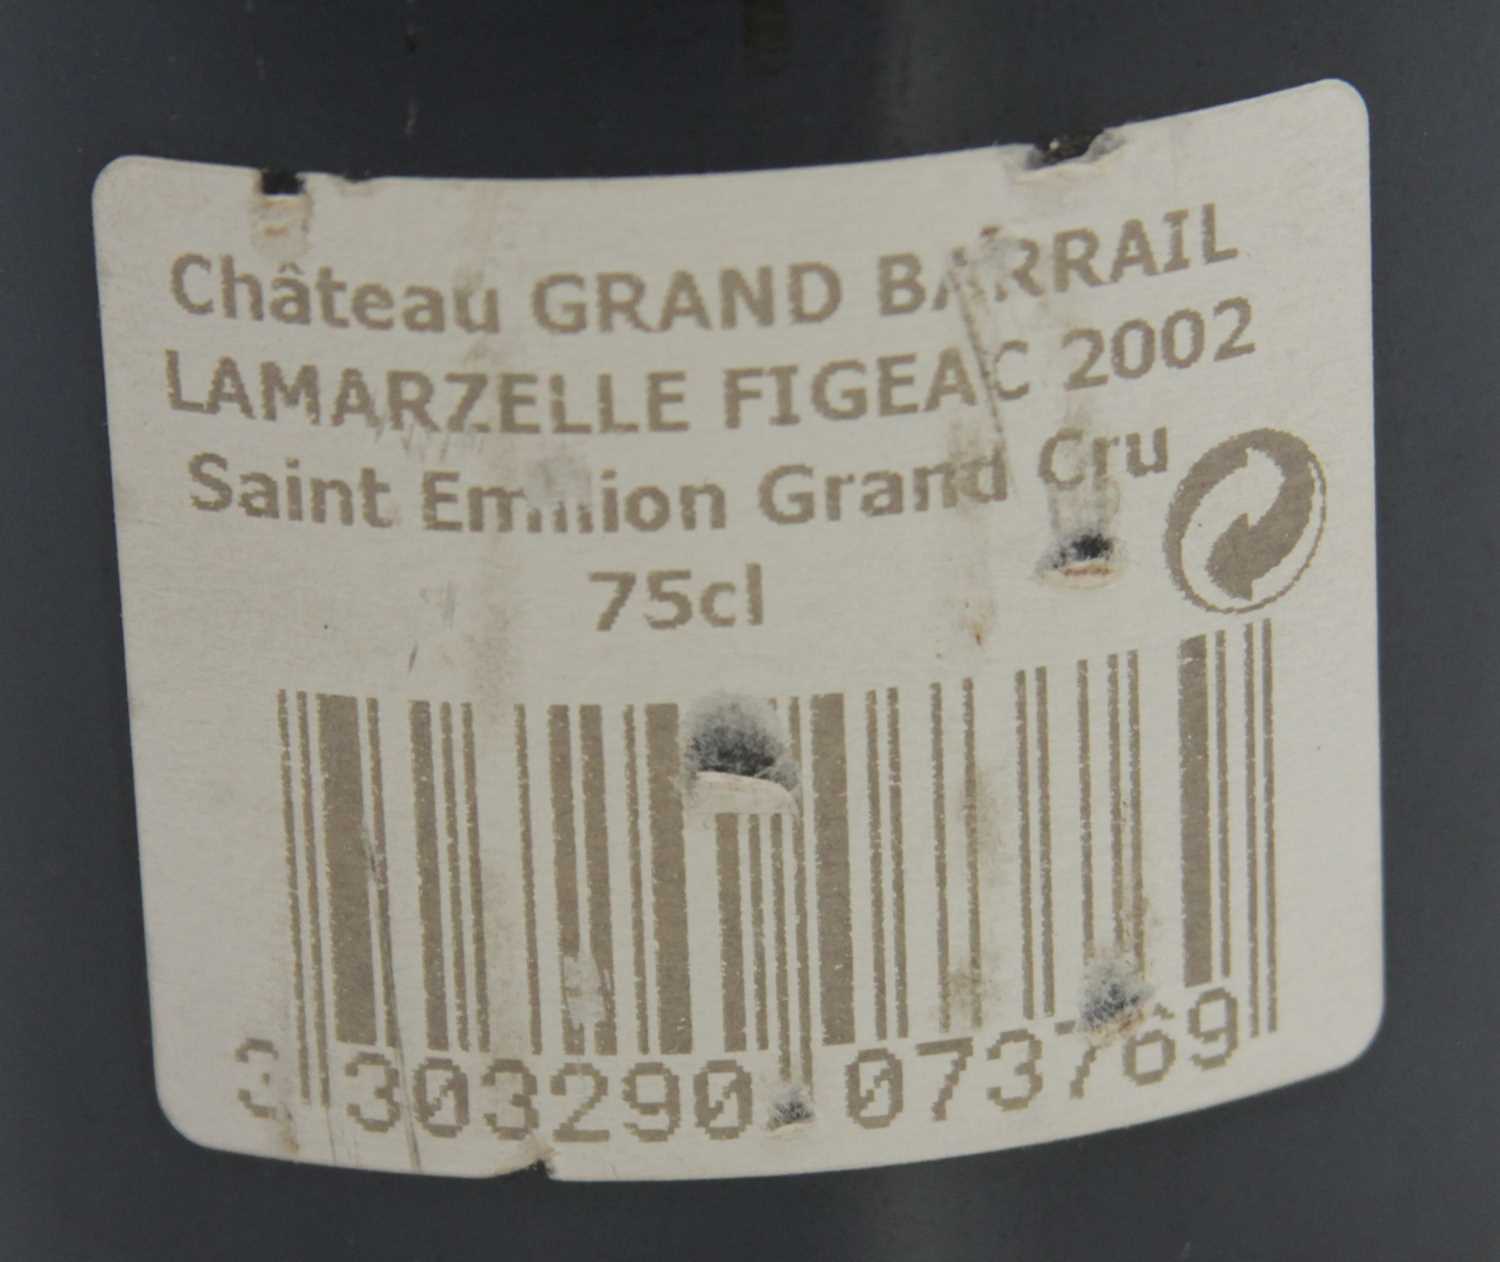 Château Grand Barrail Lamarzelle Gigeac, 2002, Saint-Emilion Grand Cru, one bottle - Image 5 of 5